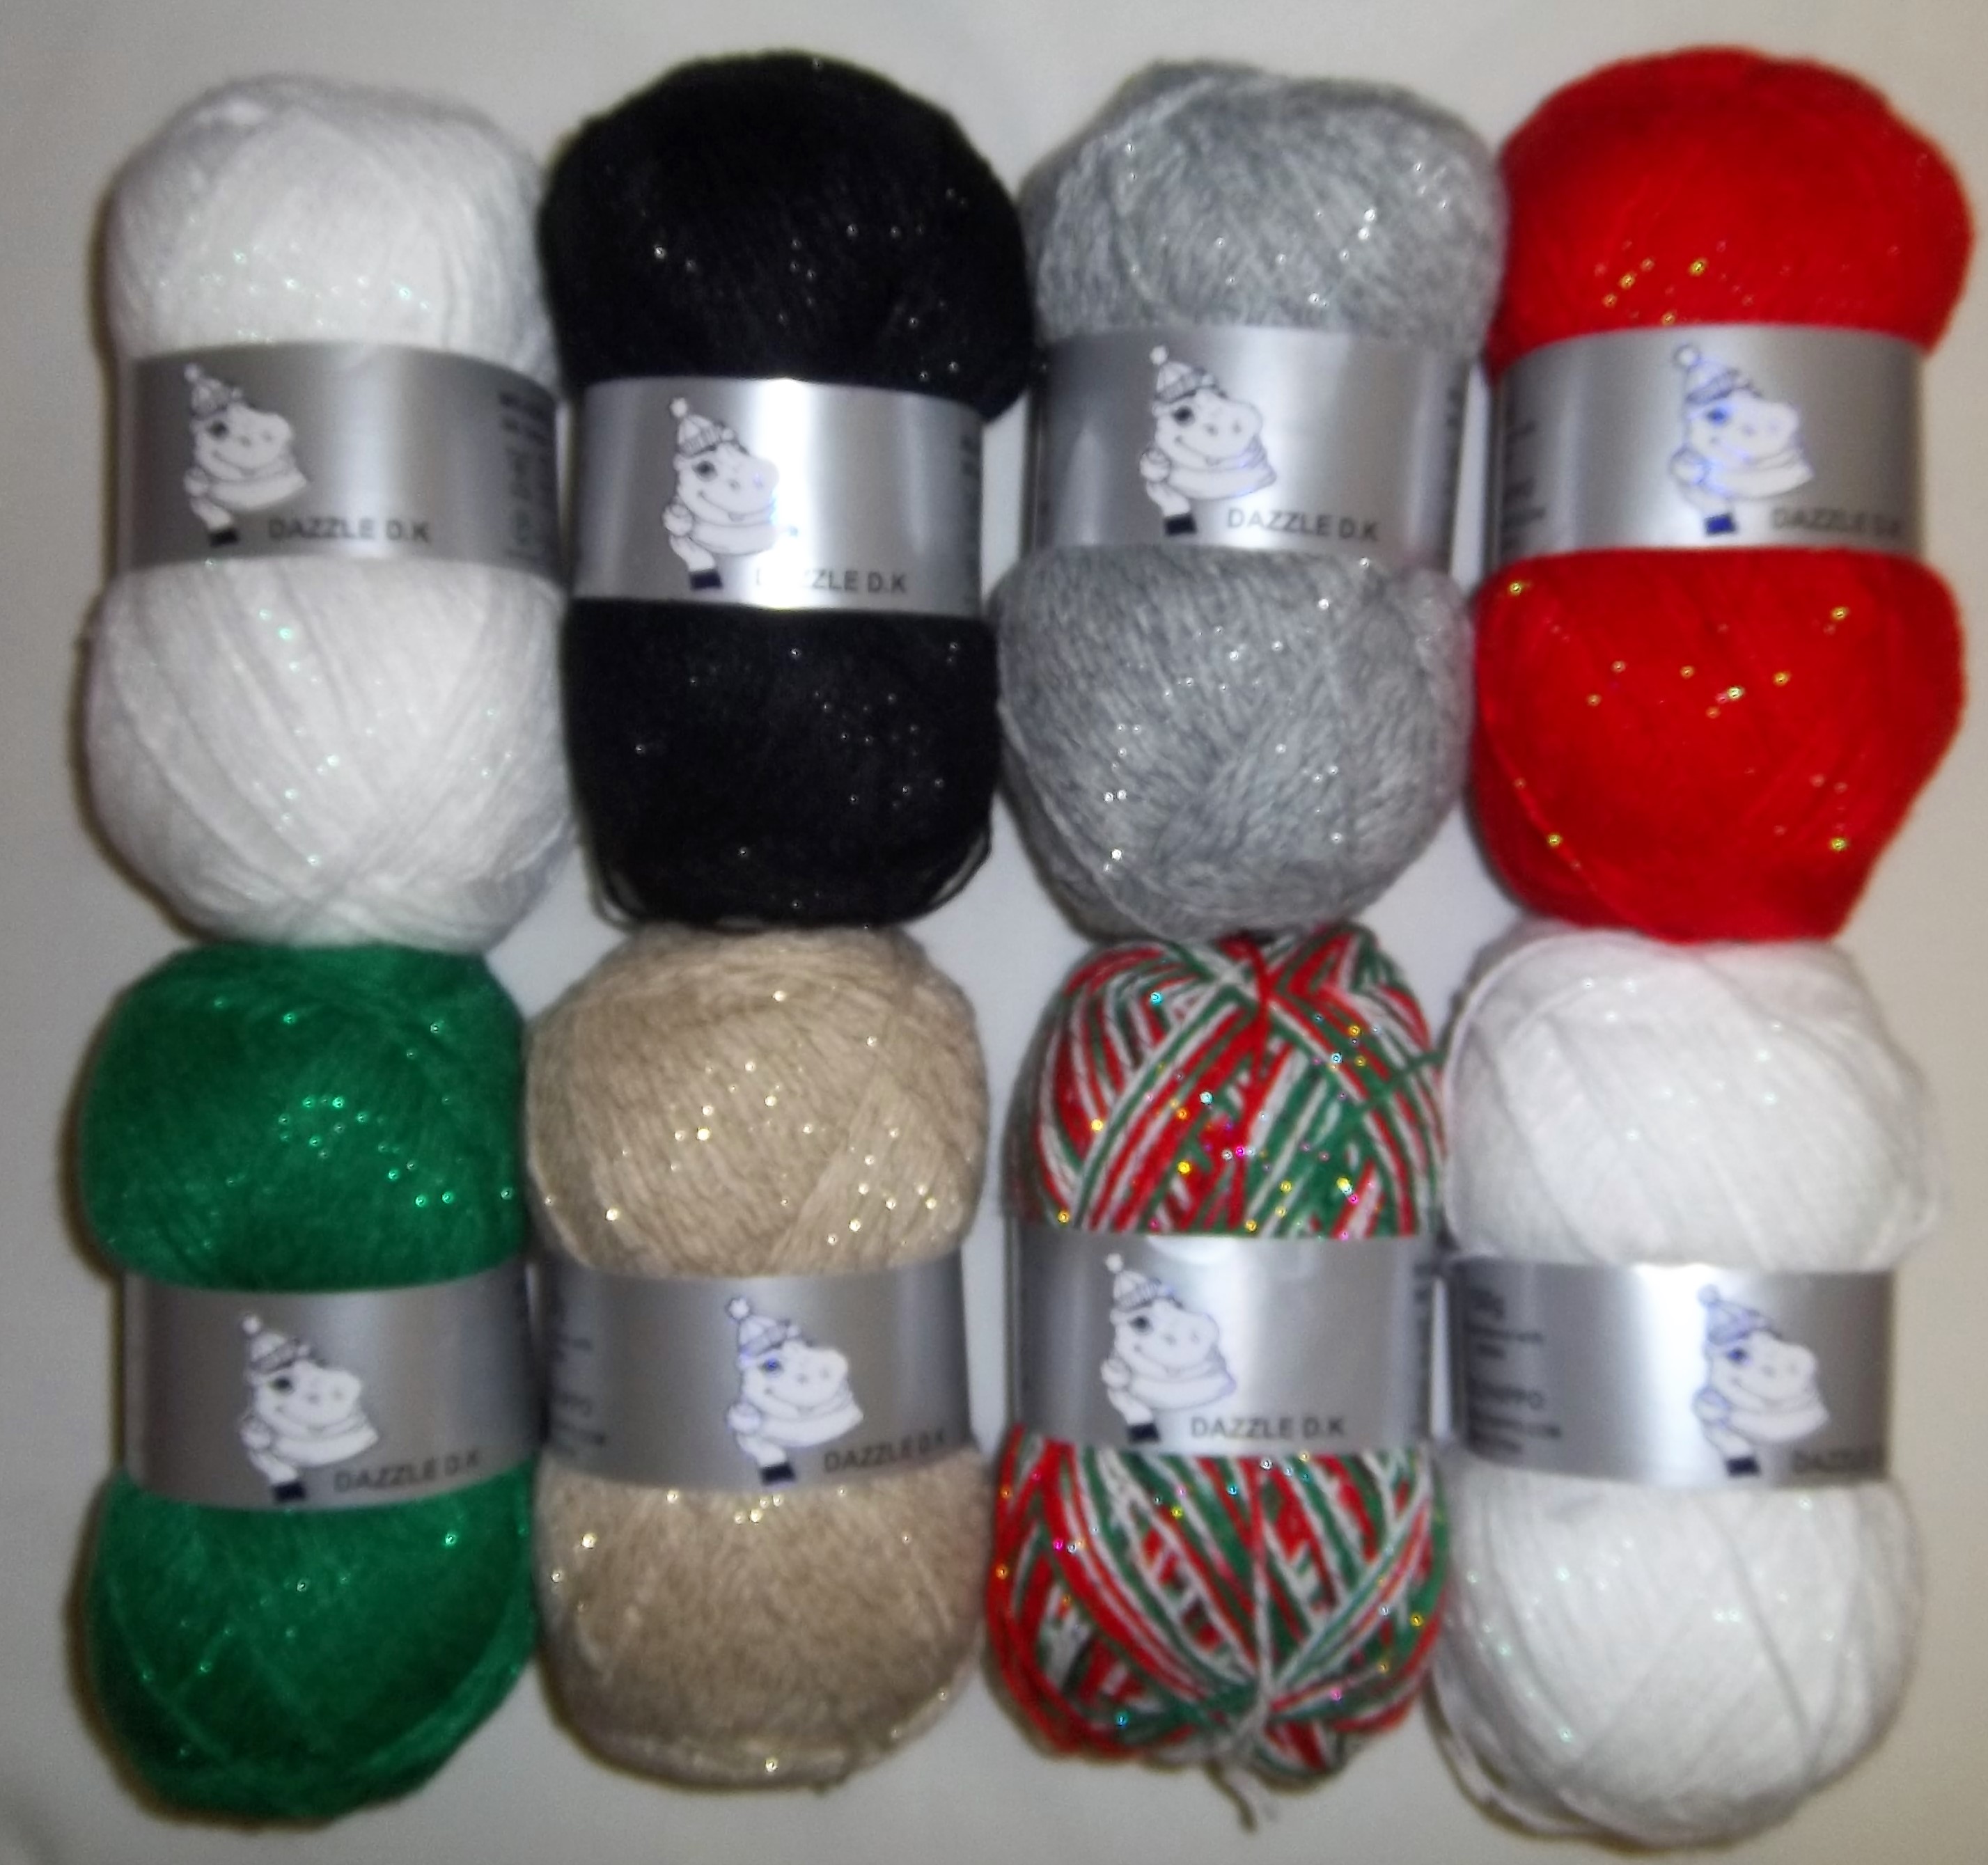 Dazzle Double Knitting Yarn 100g -